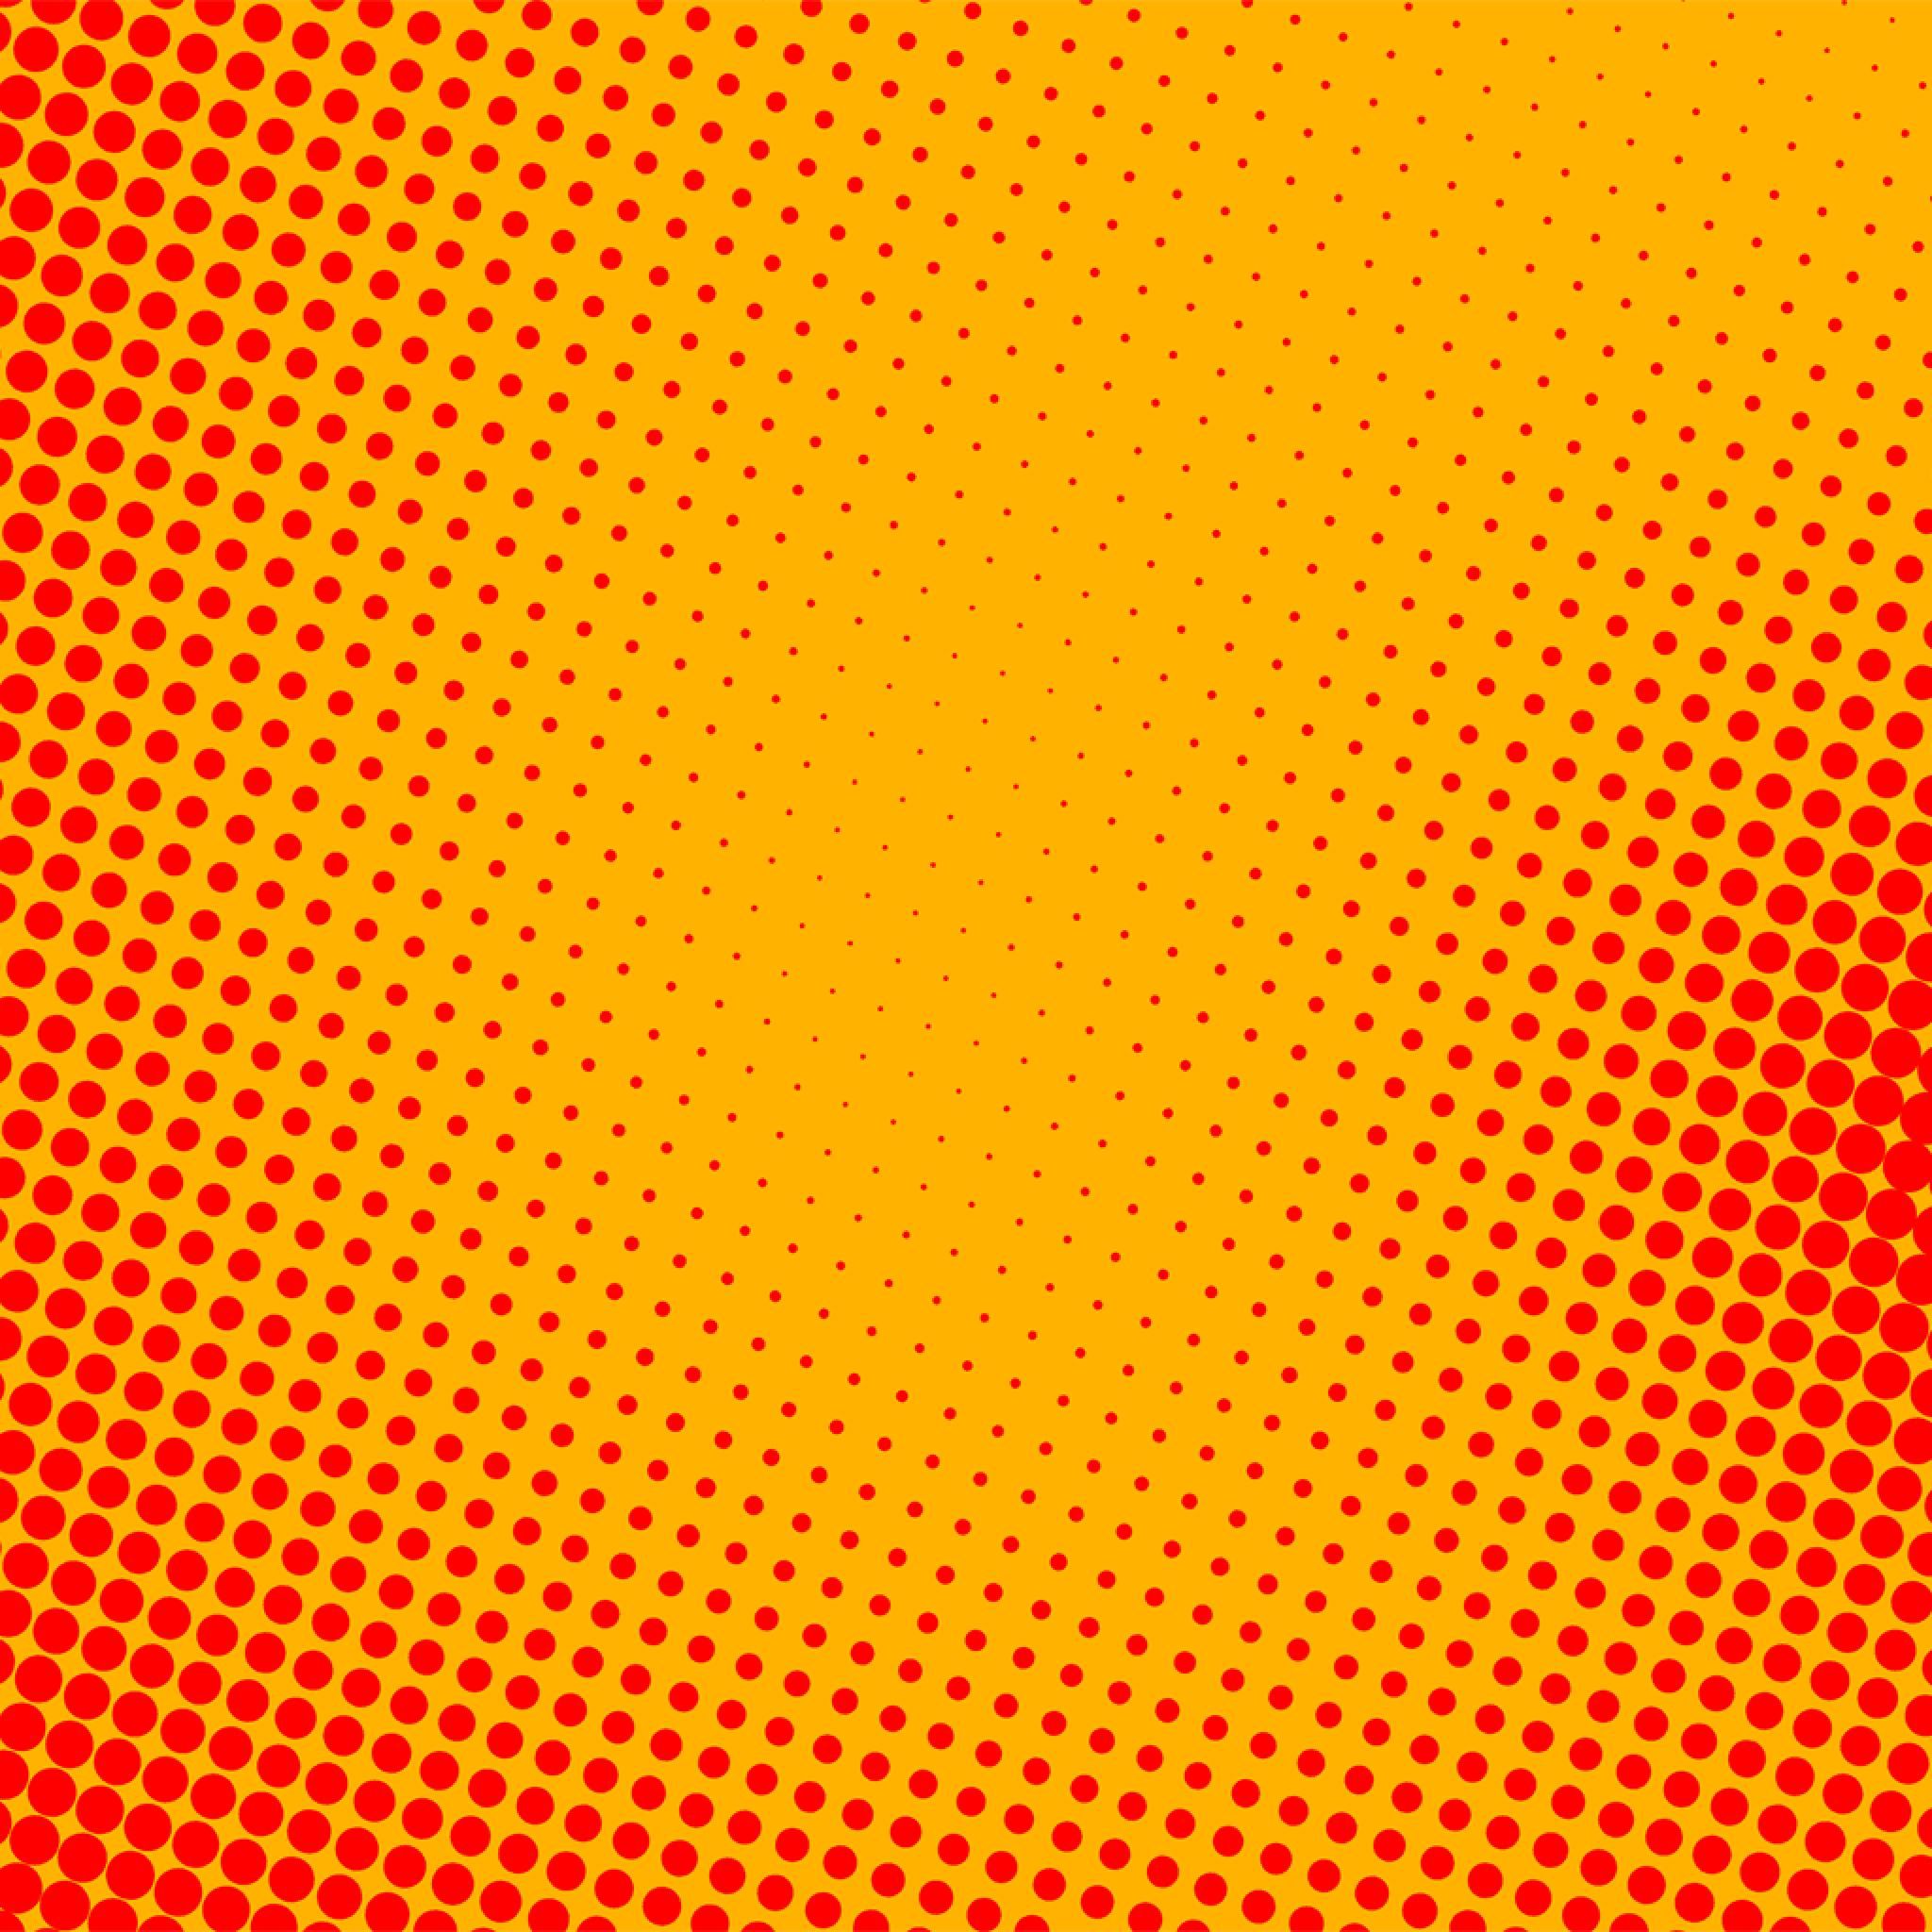 comic book backgrounds retina ipad color halftone dots pattern